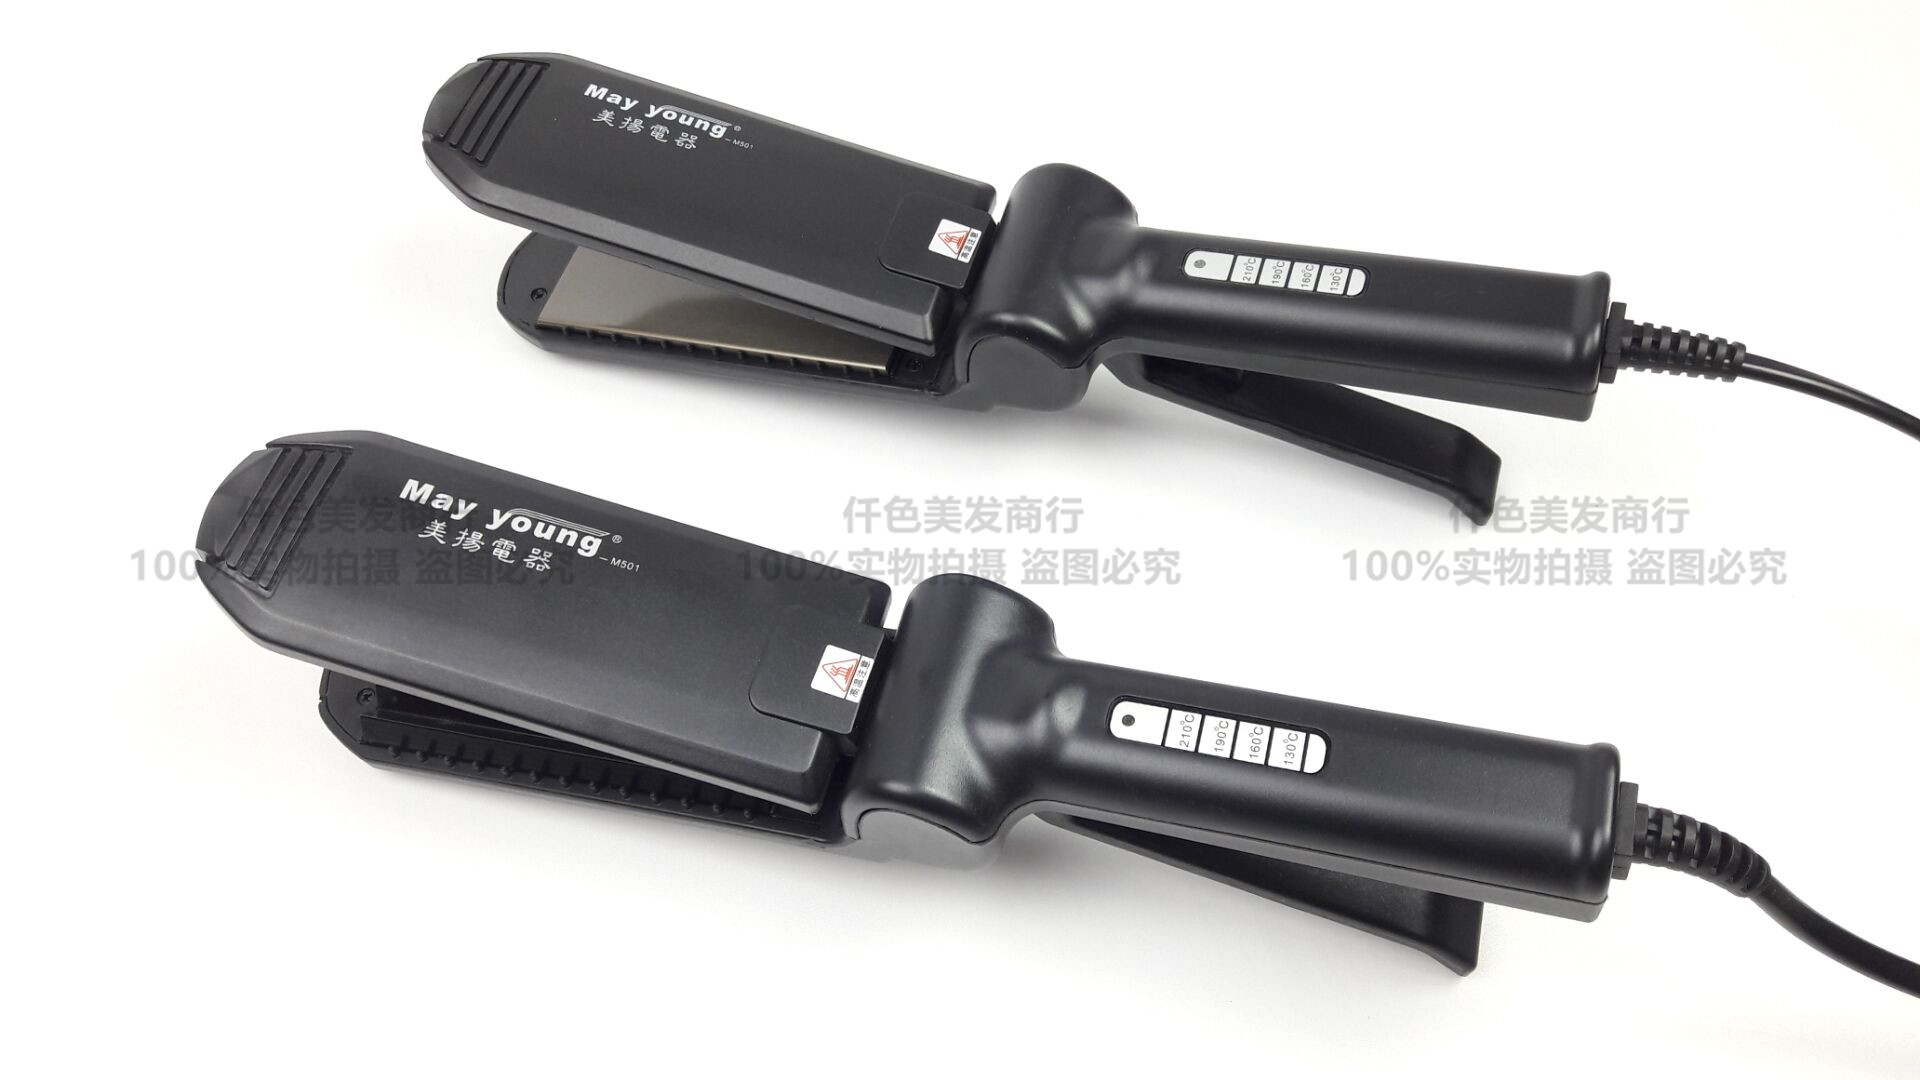 Meiyang M501A M501B Scissors hair straightener corrugated plate hair straightener splint global universal voltage